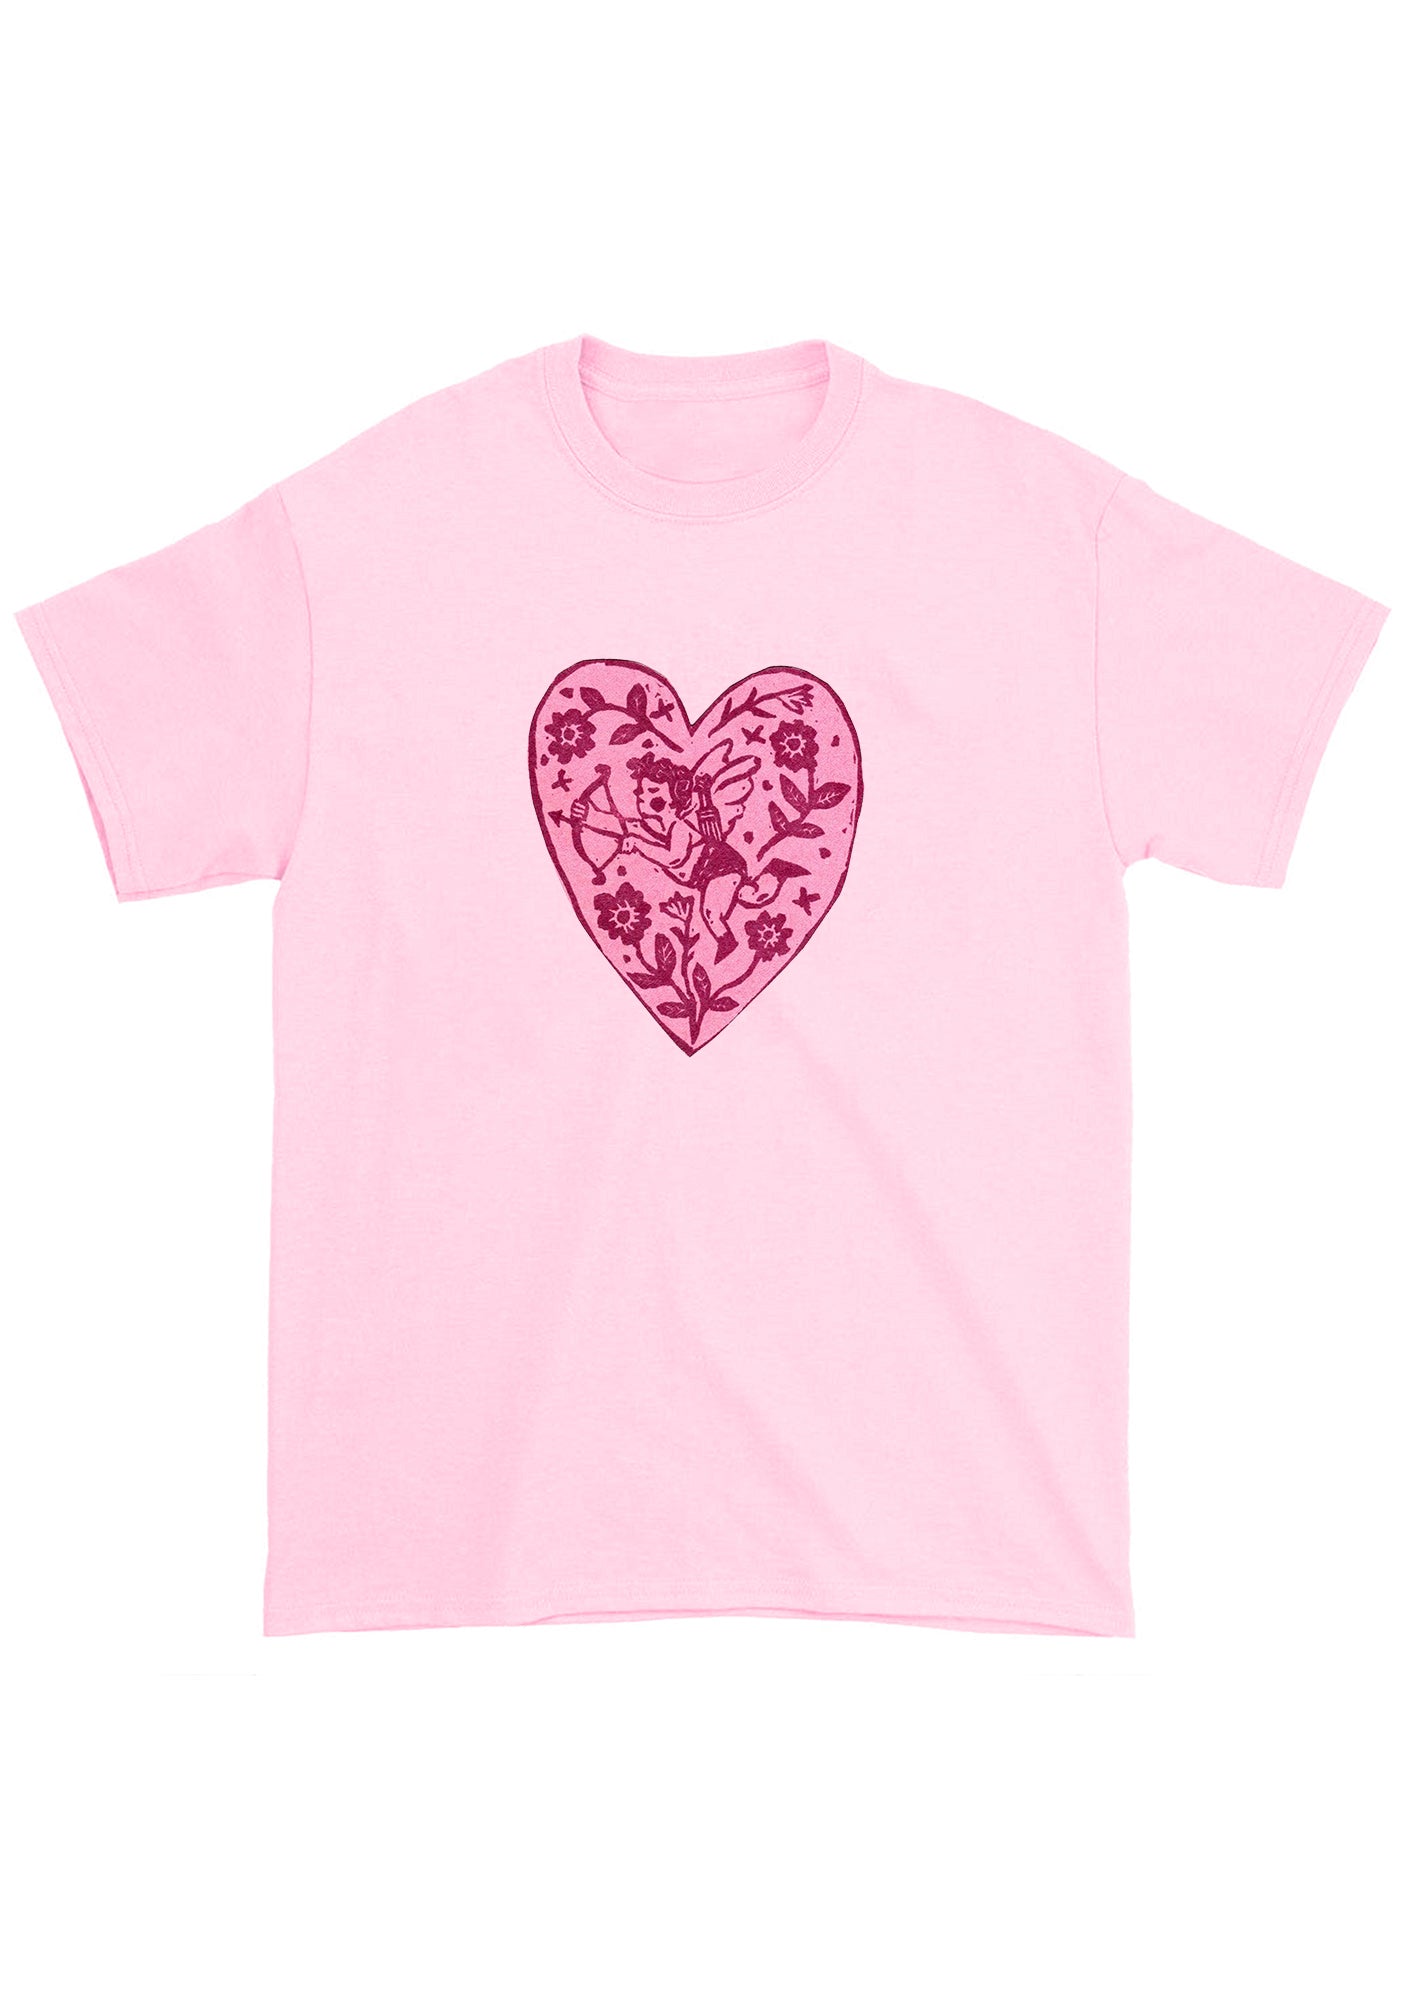 Pink Angel Heart Chunky Shirt